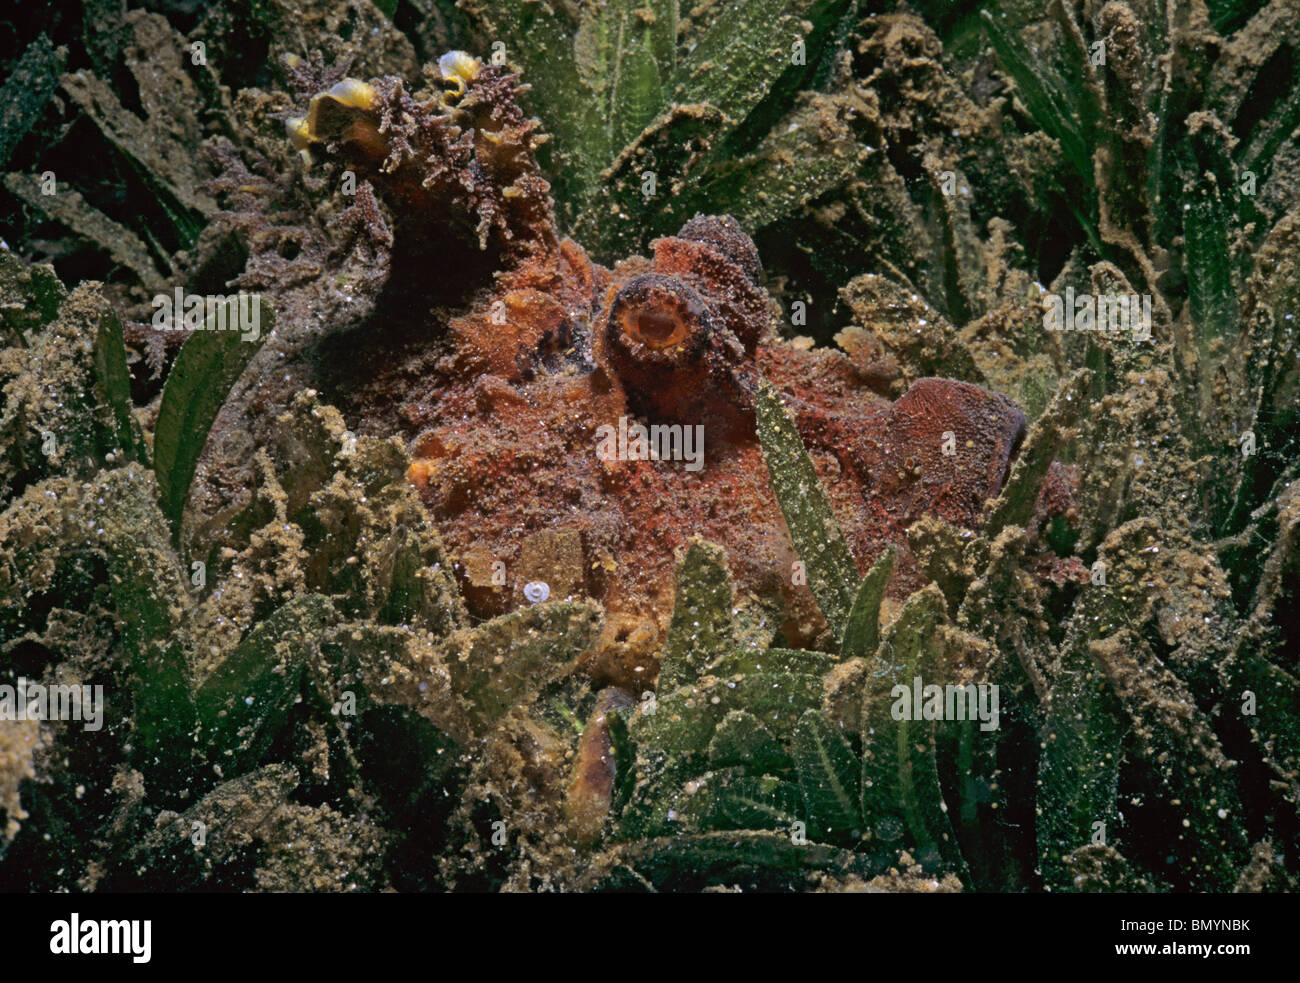 Two-stick stingfish (Inimicus filamentosus) Camouflage. Eilat, Israel - Red Sea Stock Photo